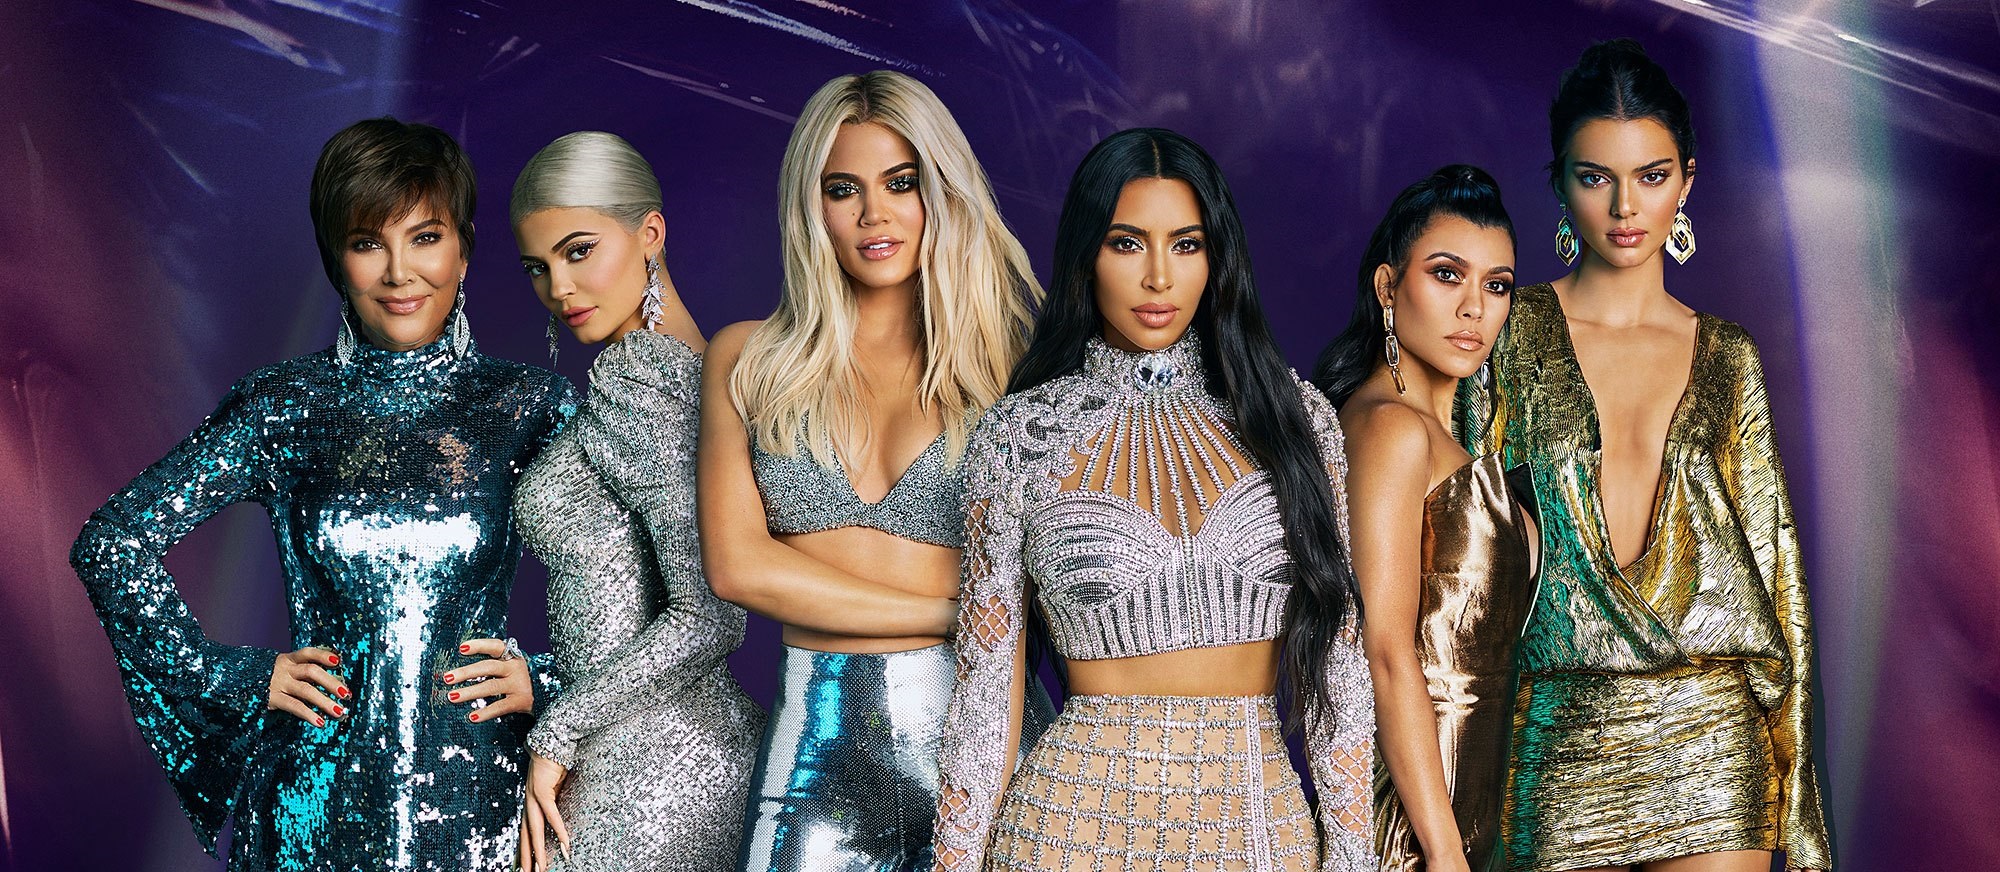 El fin de una era: Kim Kardashian confirma el término del reality "Keeping Up with the Kardashians"